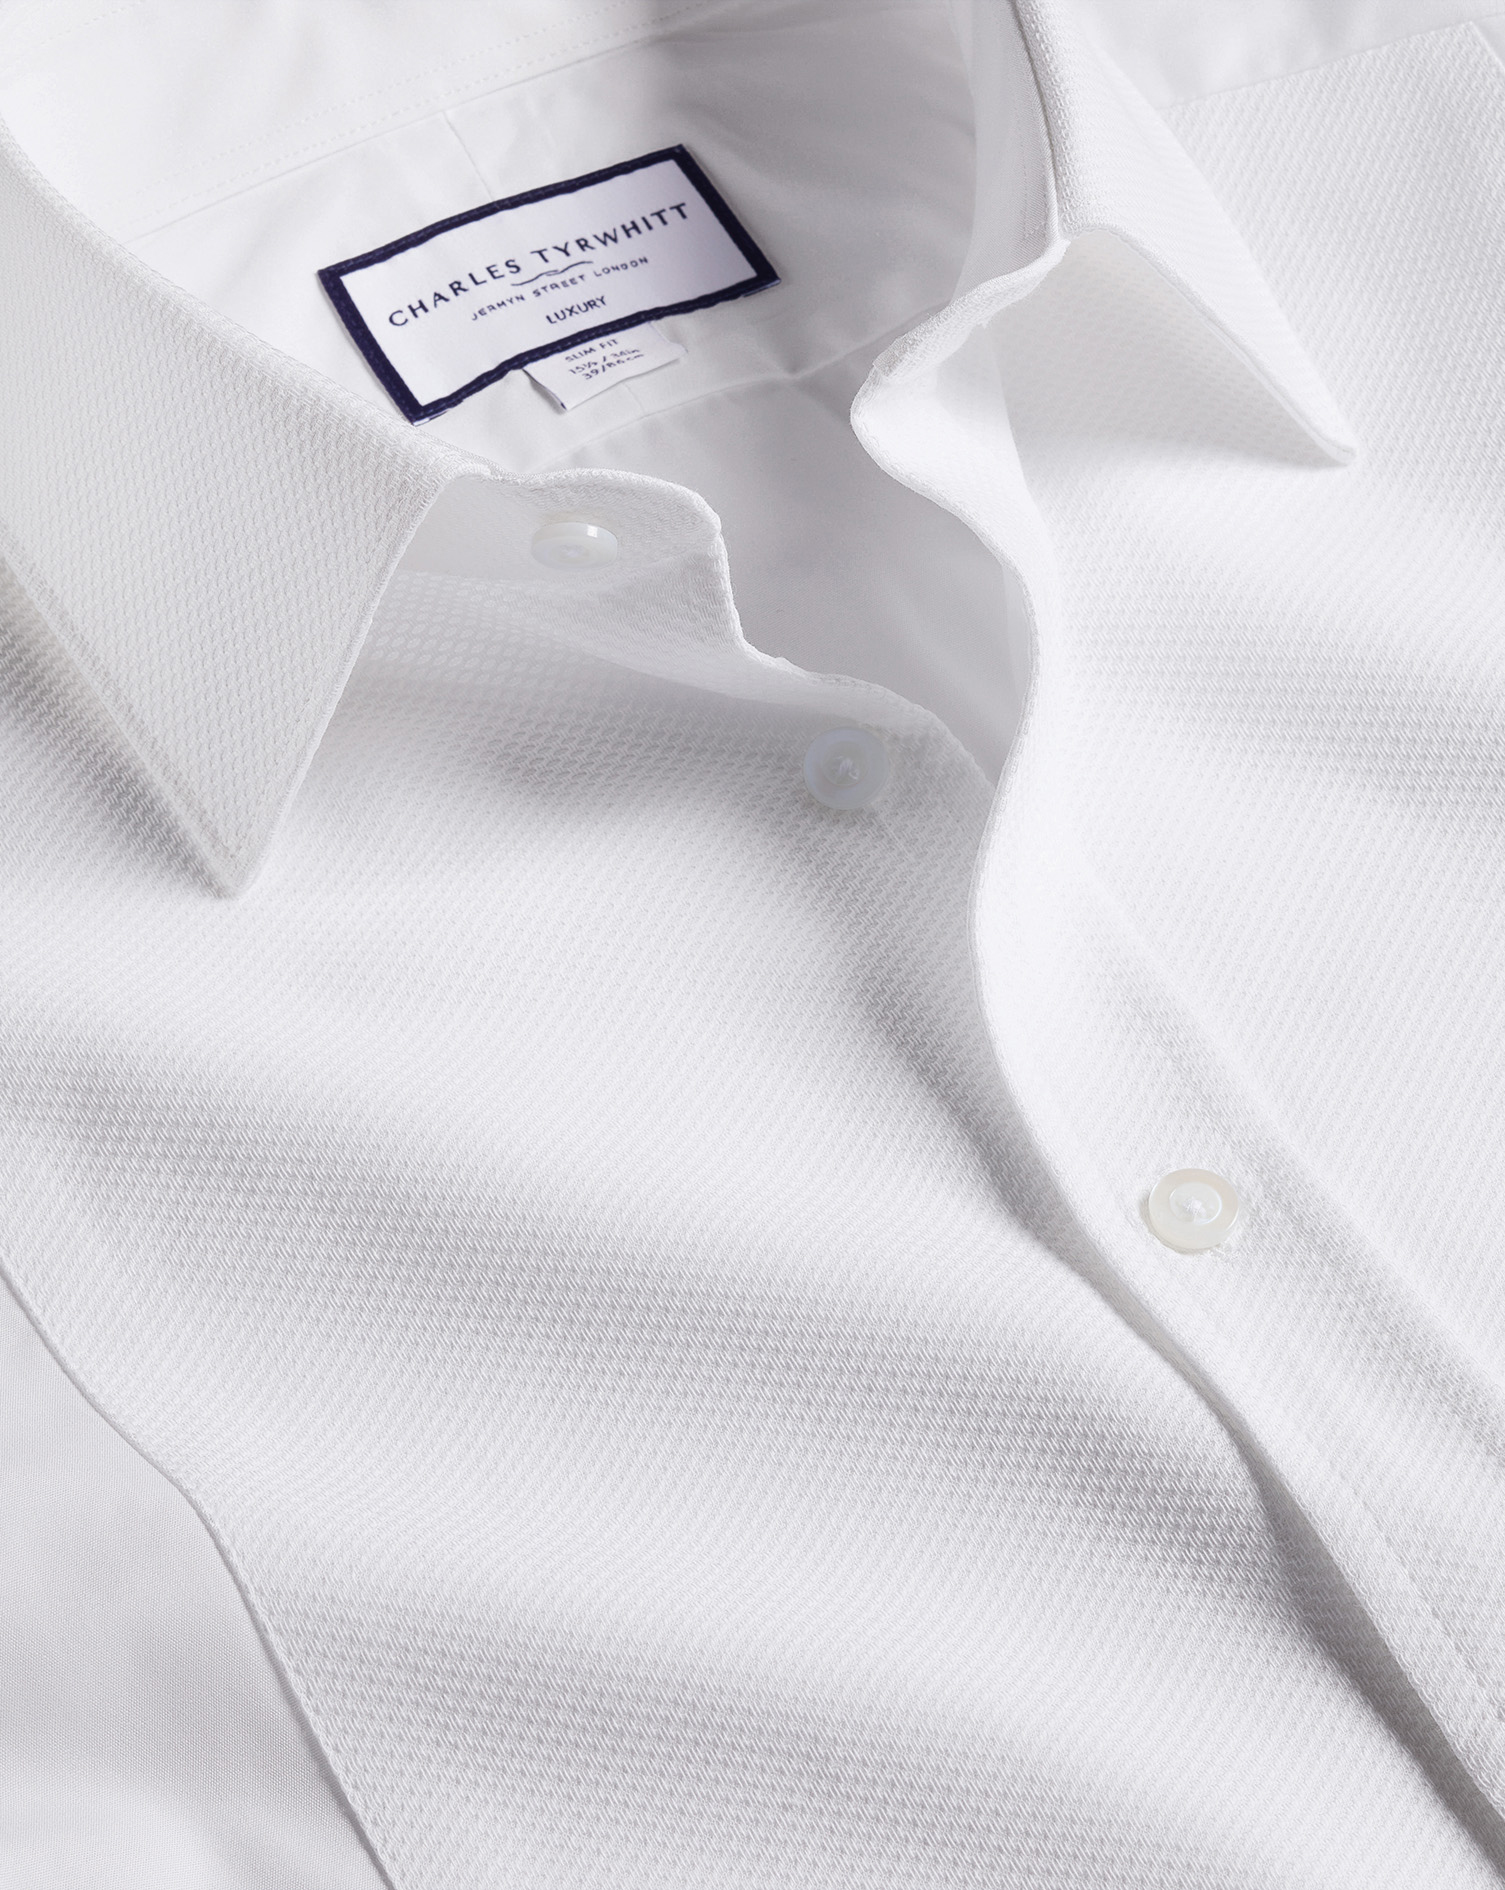 Men's Charles Tyrwhitt Marcella Bib Evening Dress Shirt - White French Cuff Size XXXL Cotton
